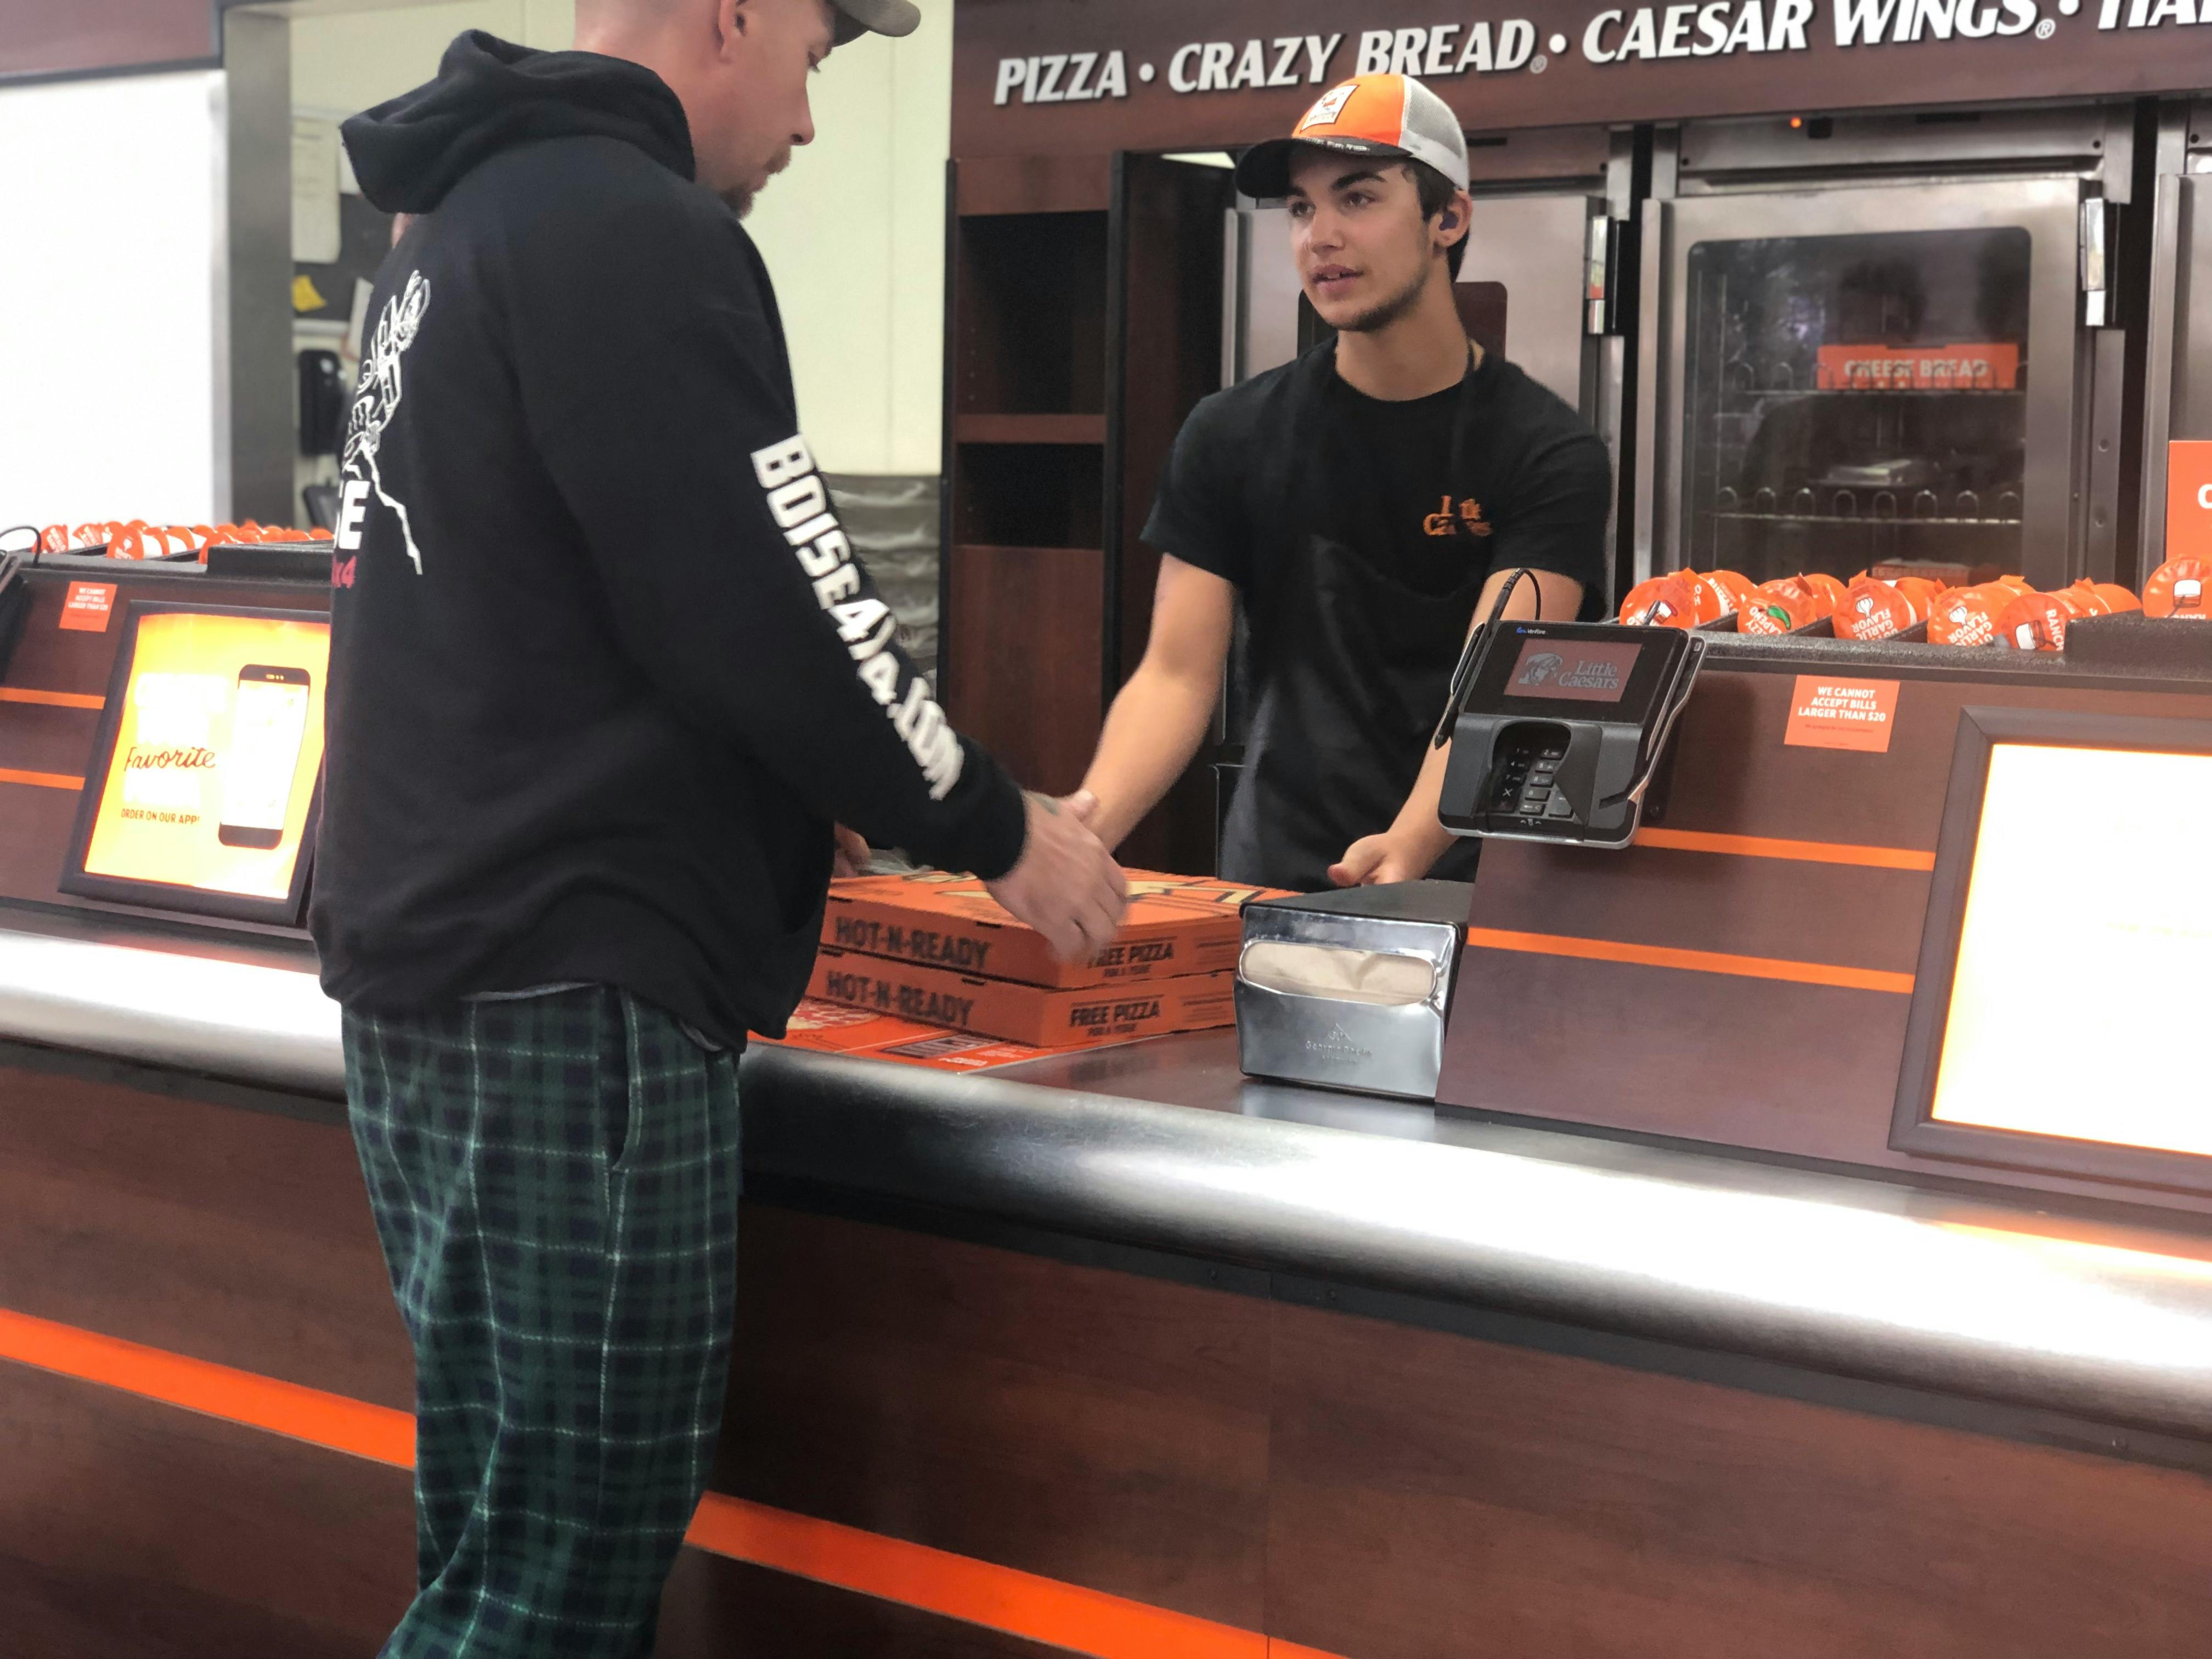 A Litlle Caesars employee behind a restaurant ocunter giving a person a pizz box.